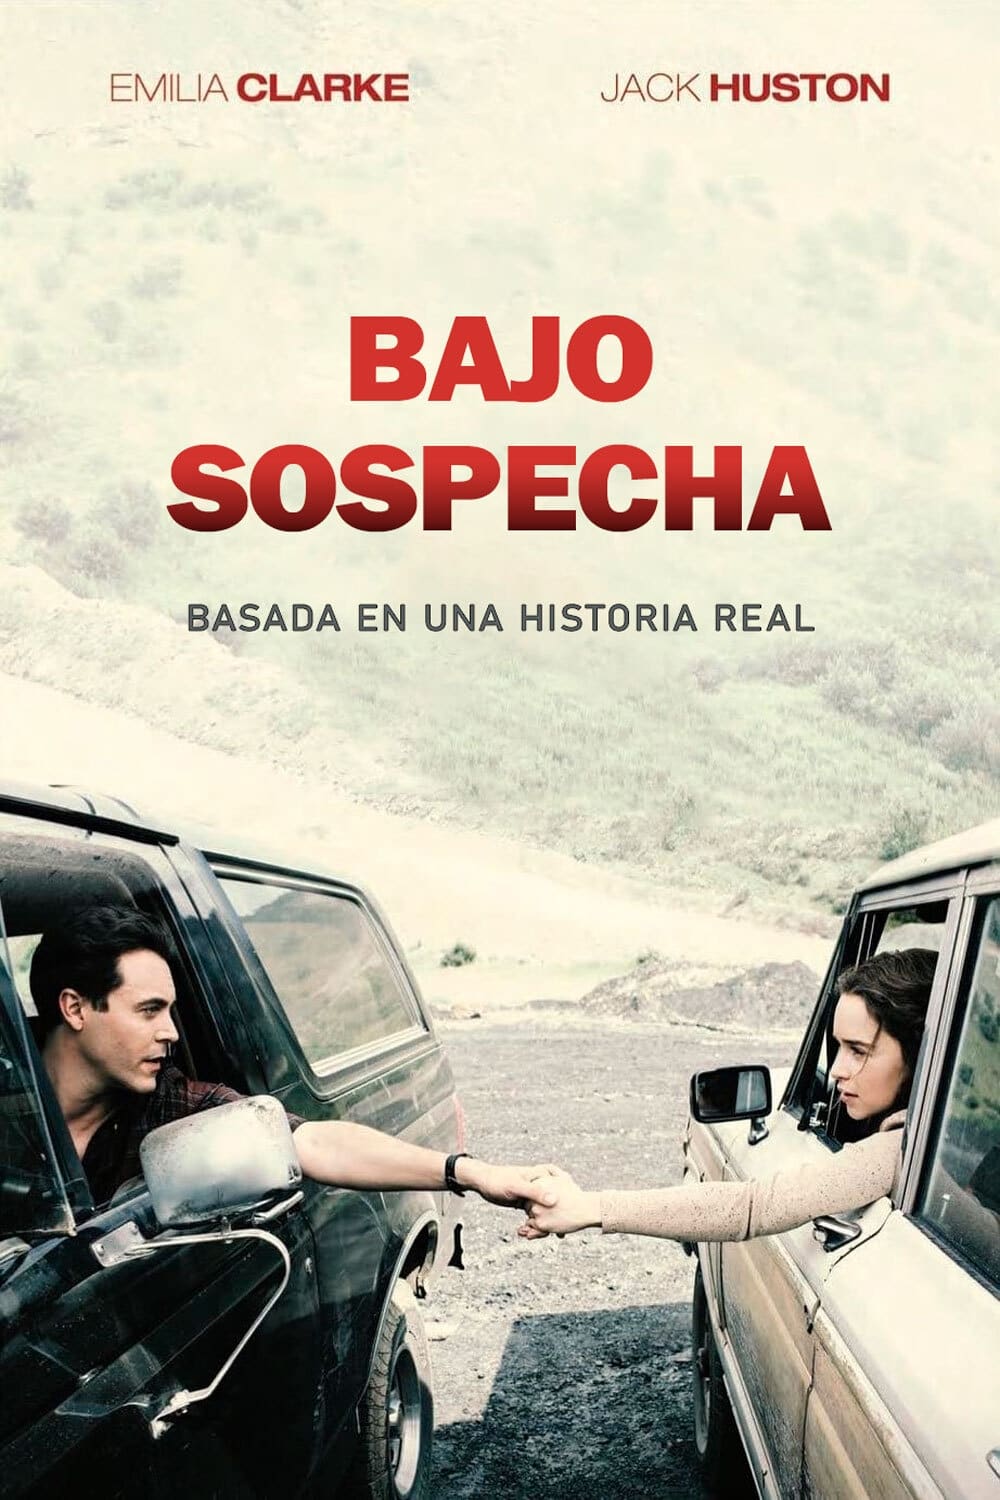 Bajo sospecha (2019) PLACEBO Full HD 1080p Latino